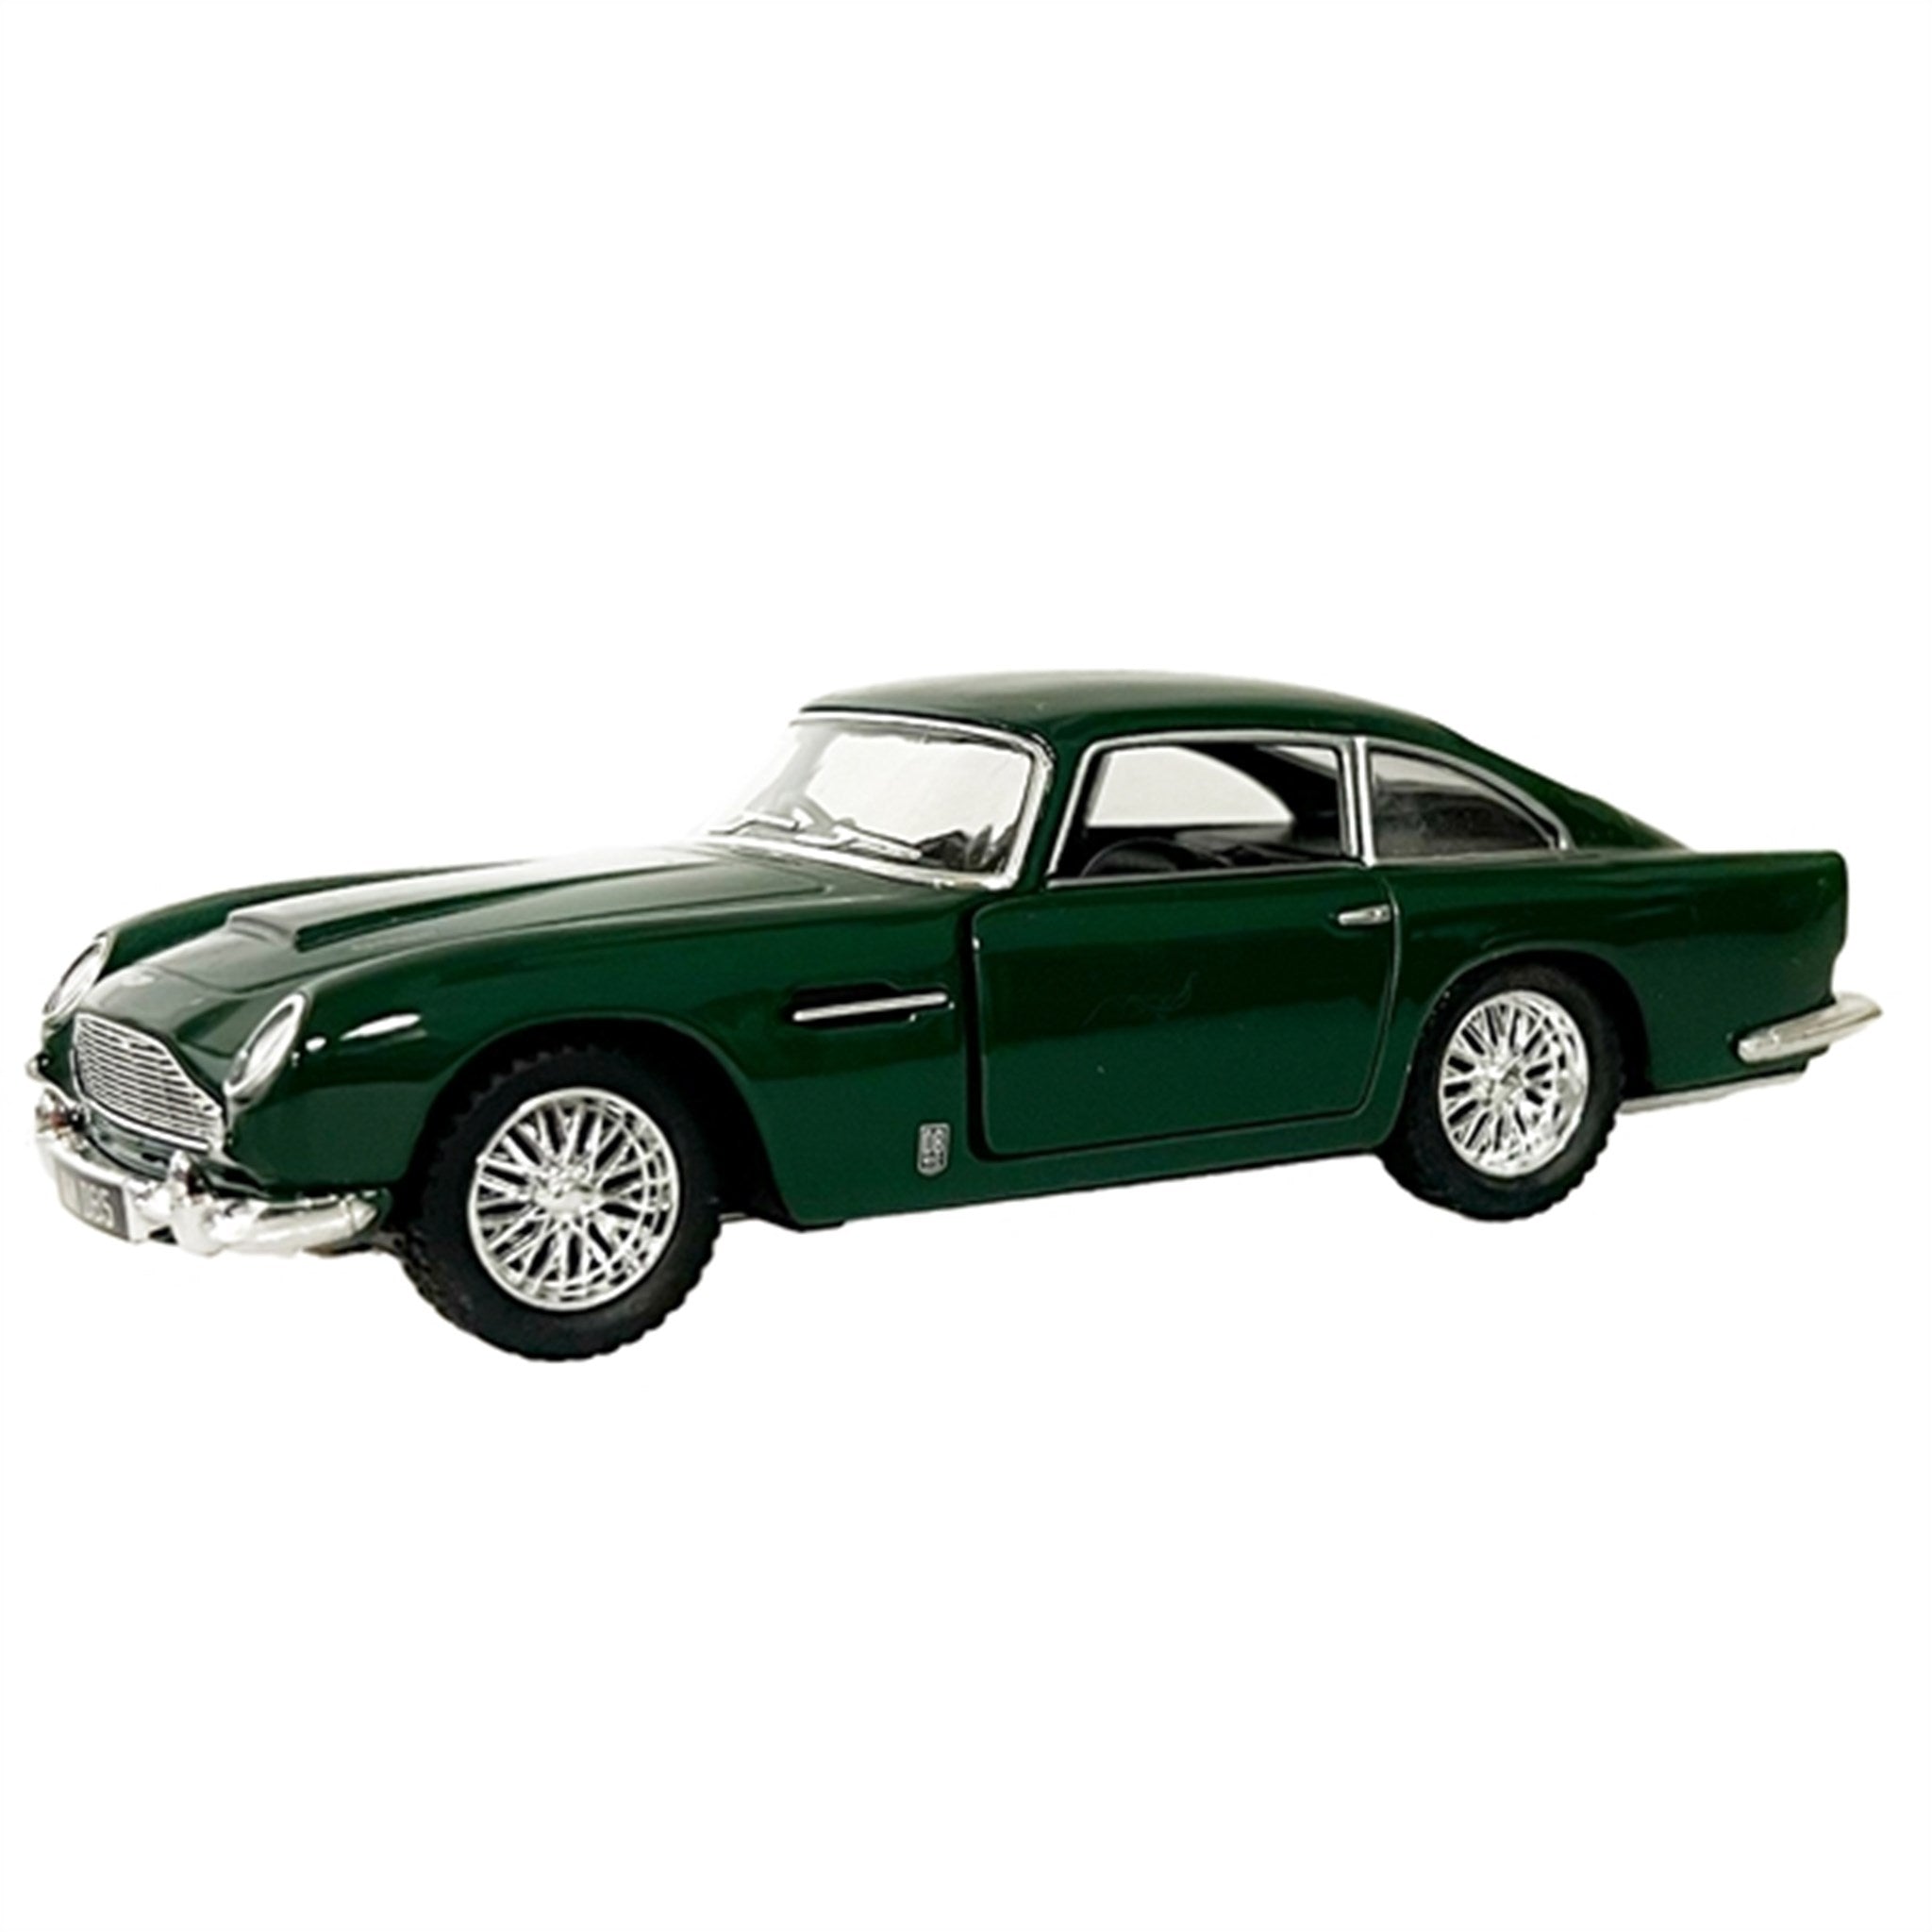 Magni Aston Martin - Grøn